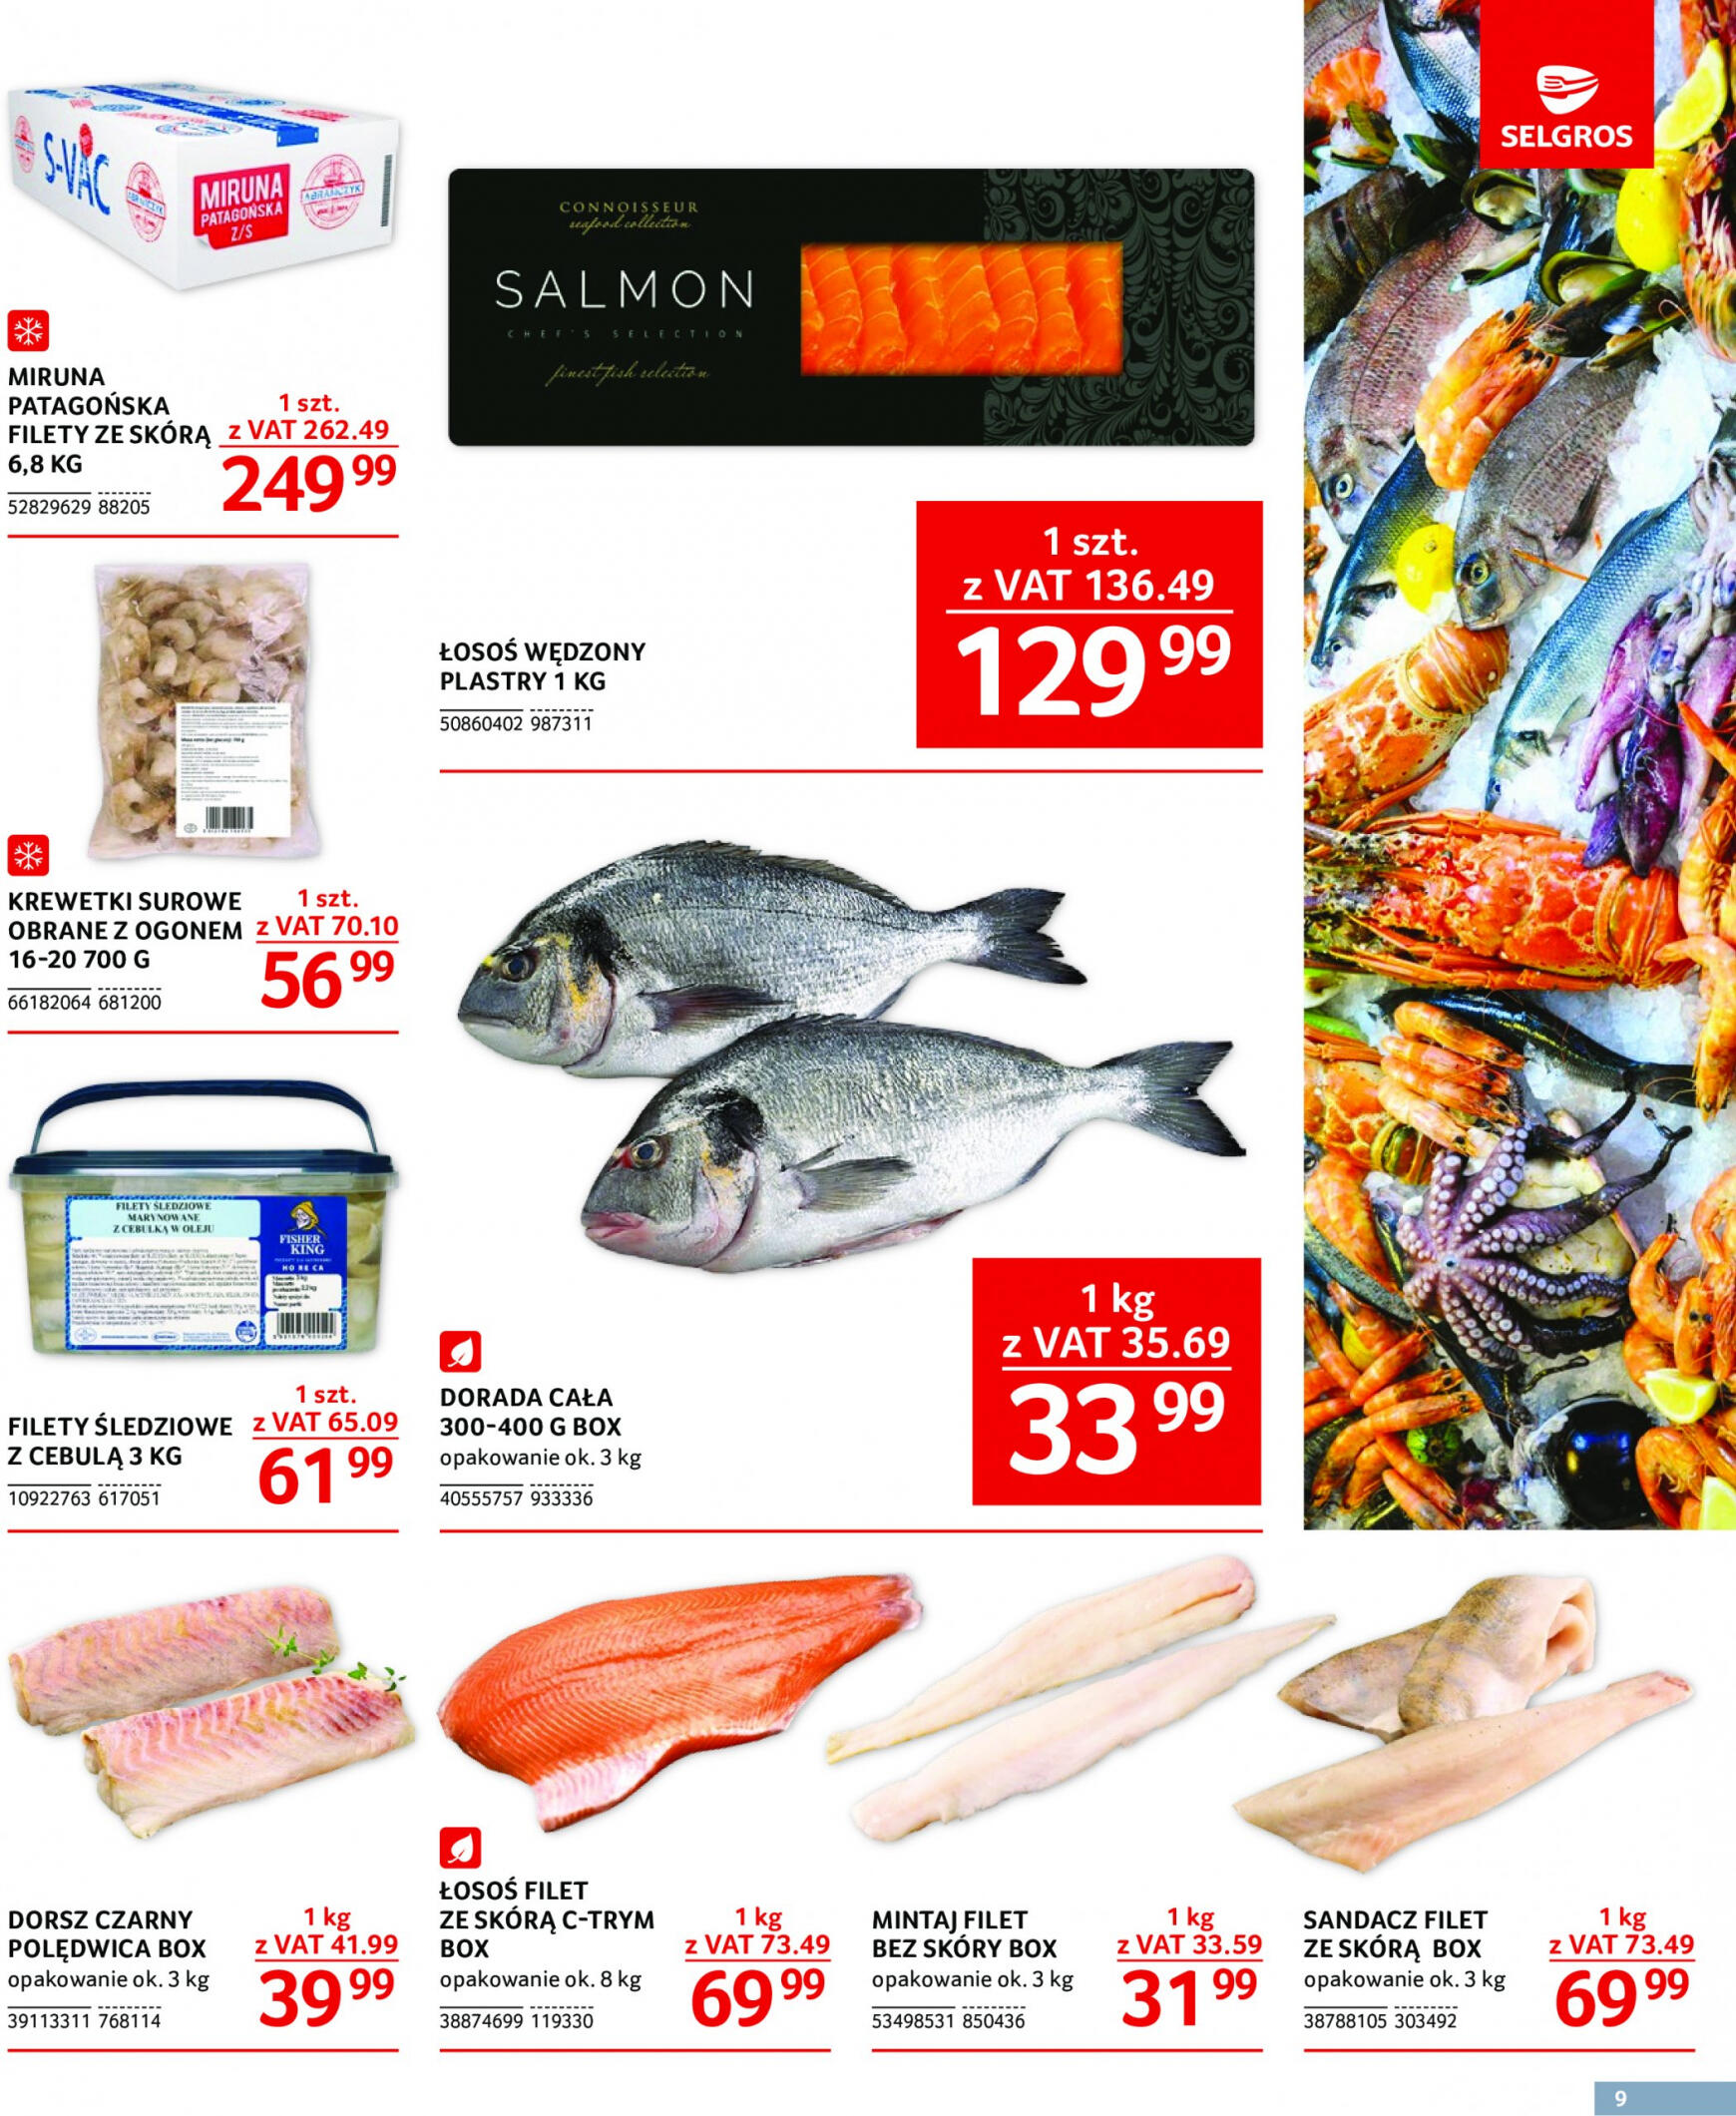 selgros - Selgros cash&carry - Dla Gastronomii gazetka aktualna ważna od 11.04. - 24.04. - page: 9